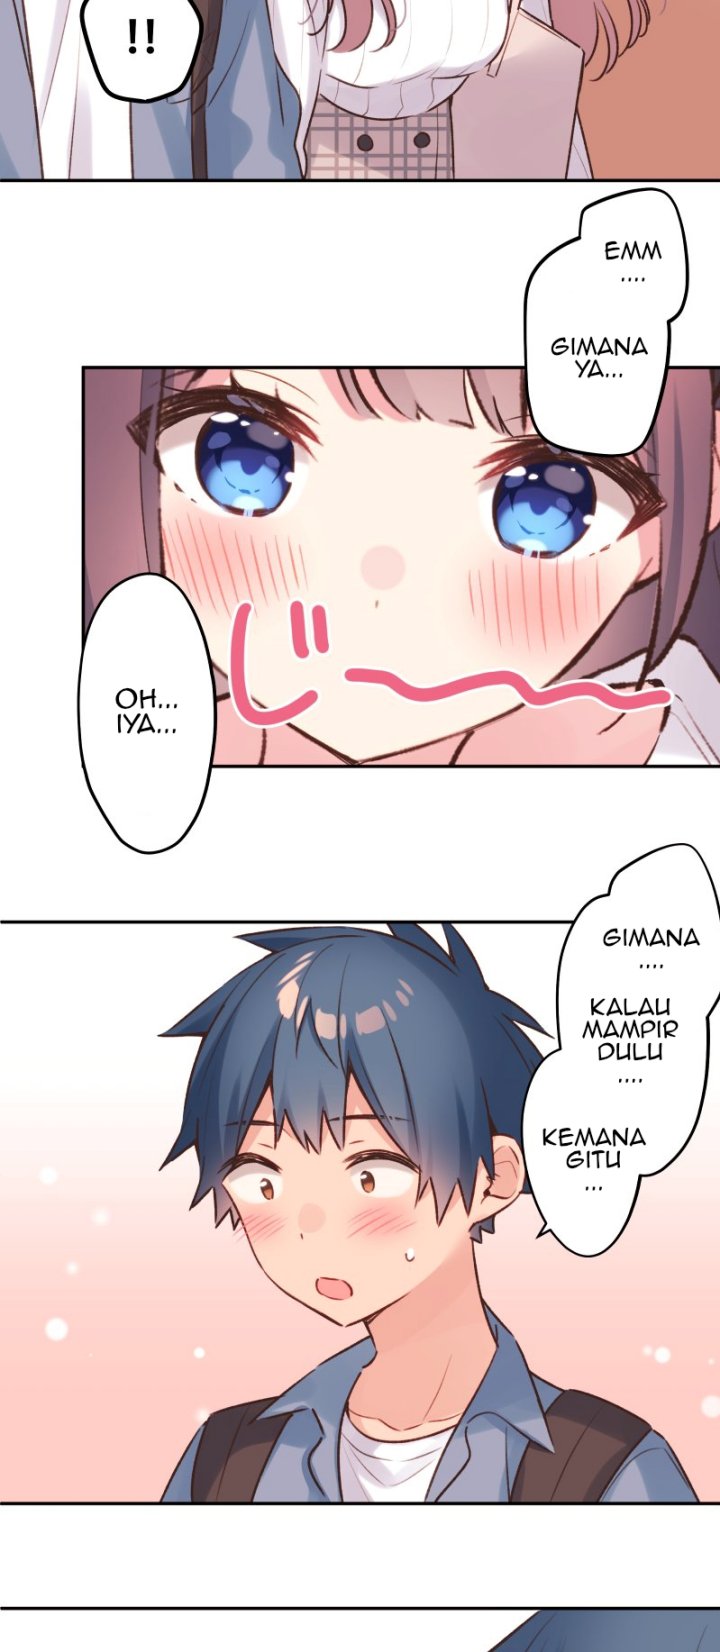 Waka-chan Is Flirty Again Chapter 91